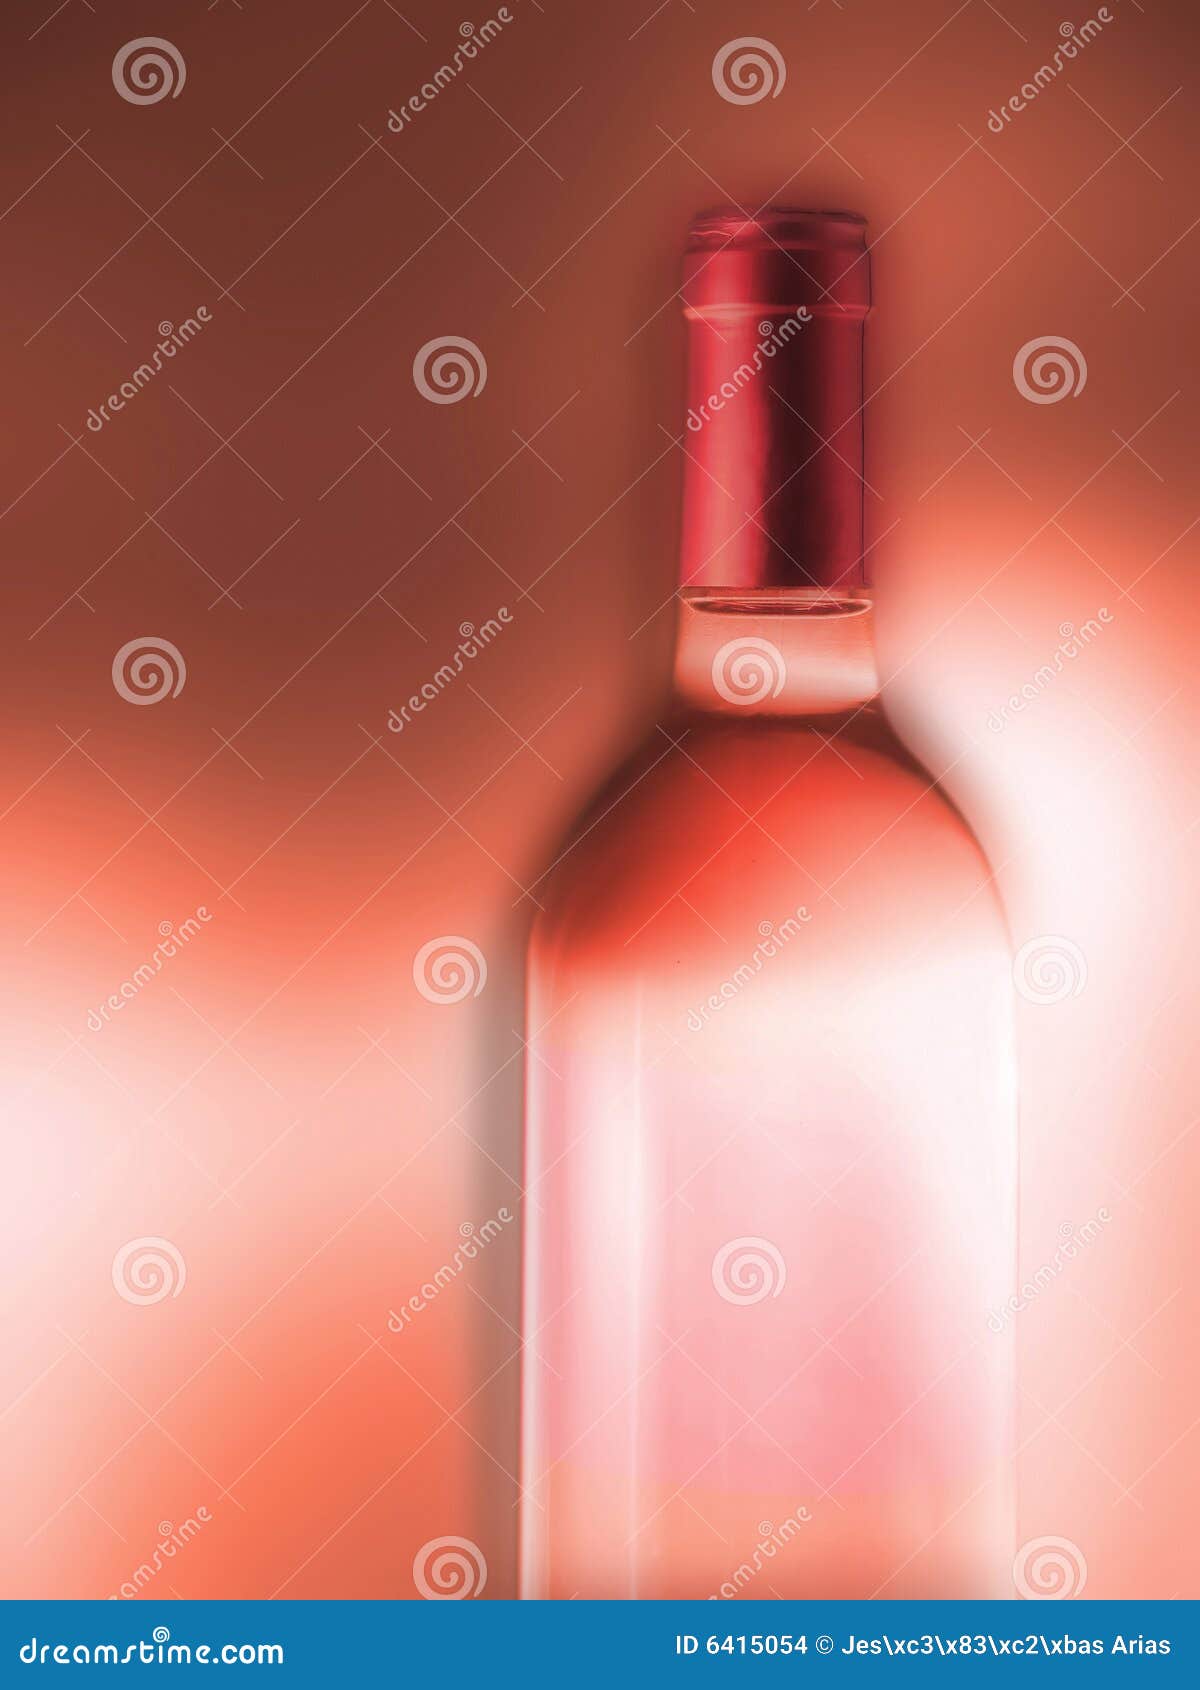 wine rose bottle